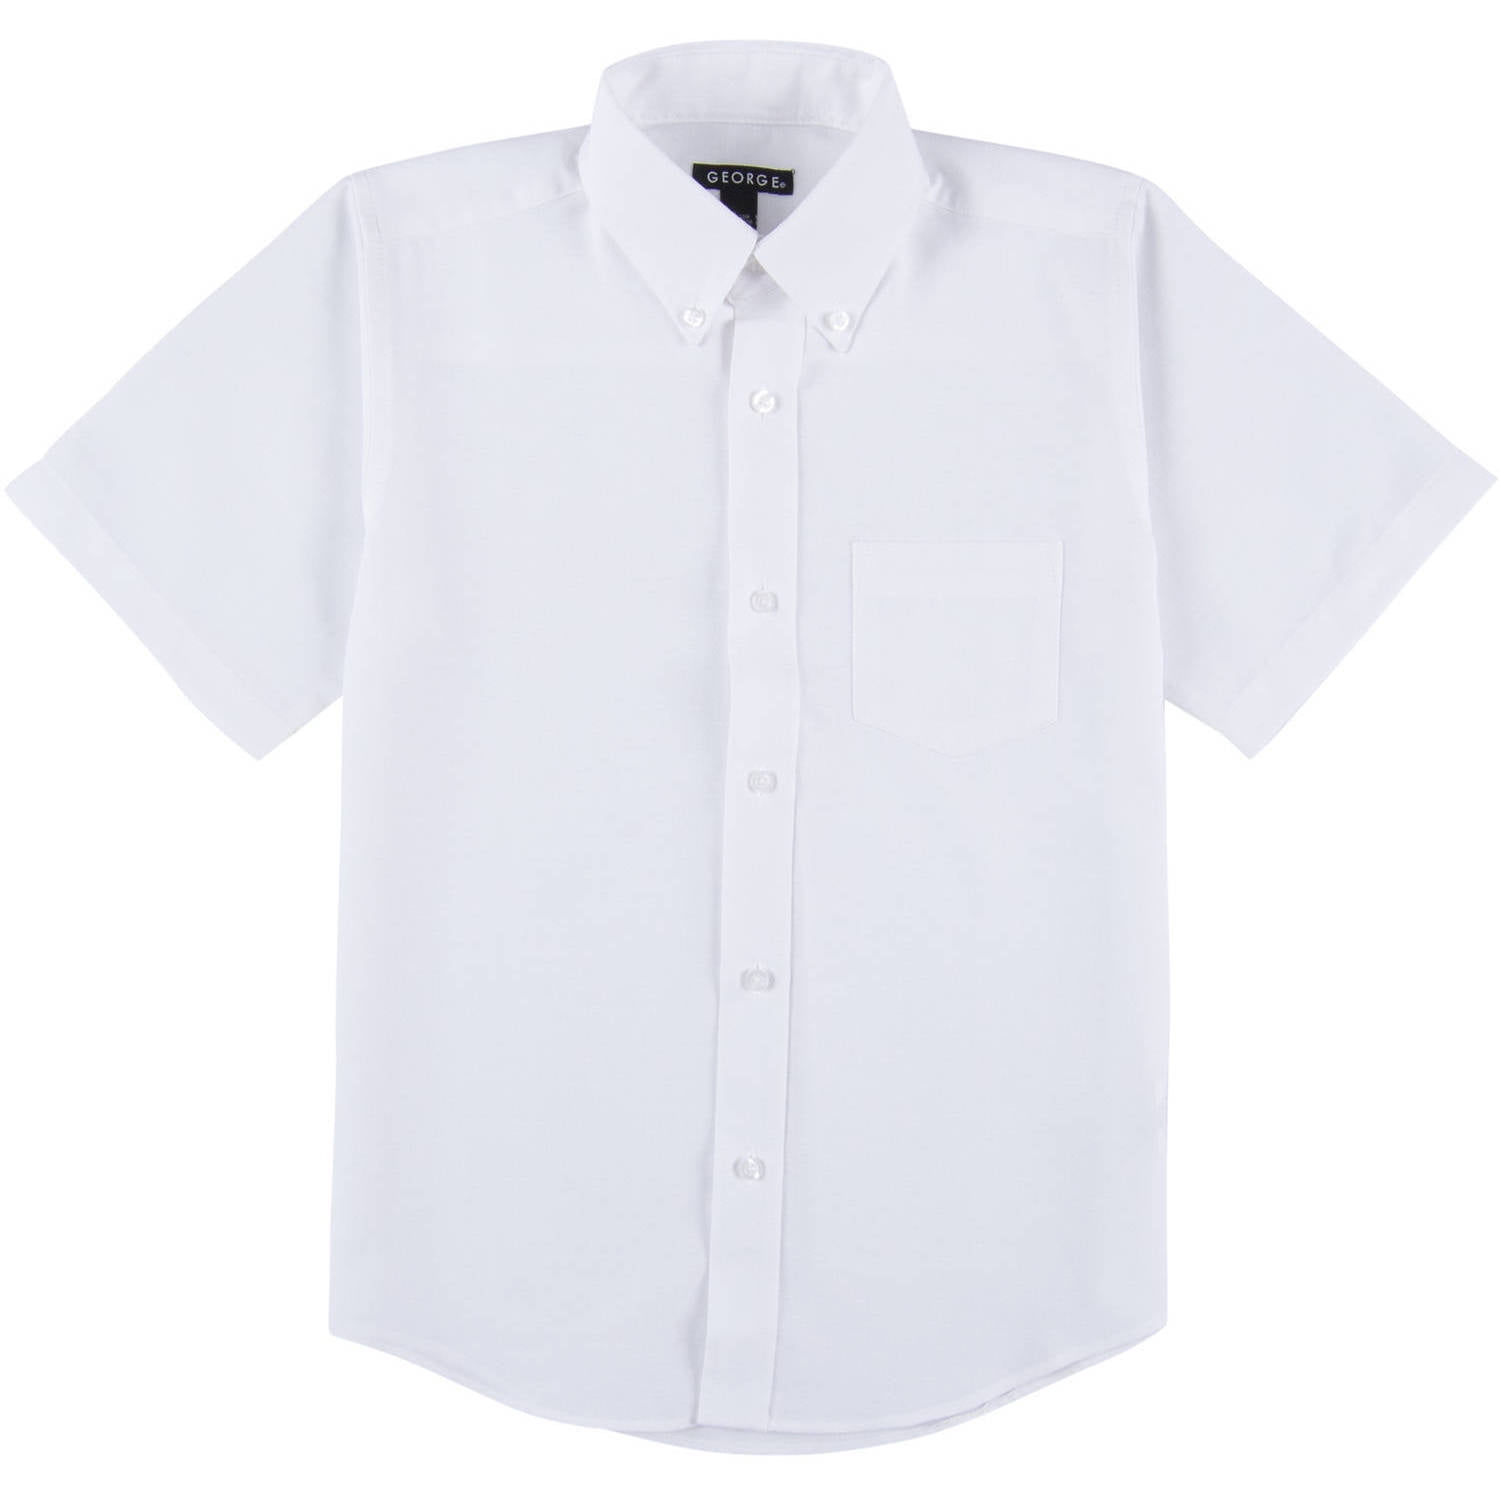 GEORGE - George Husky Boys School Uniform Long Sleeve Button-Up Oxford ...